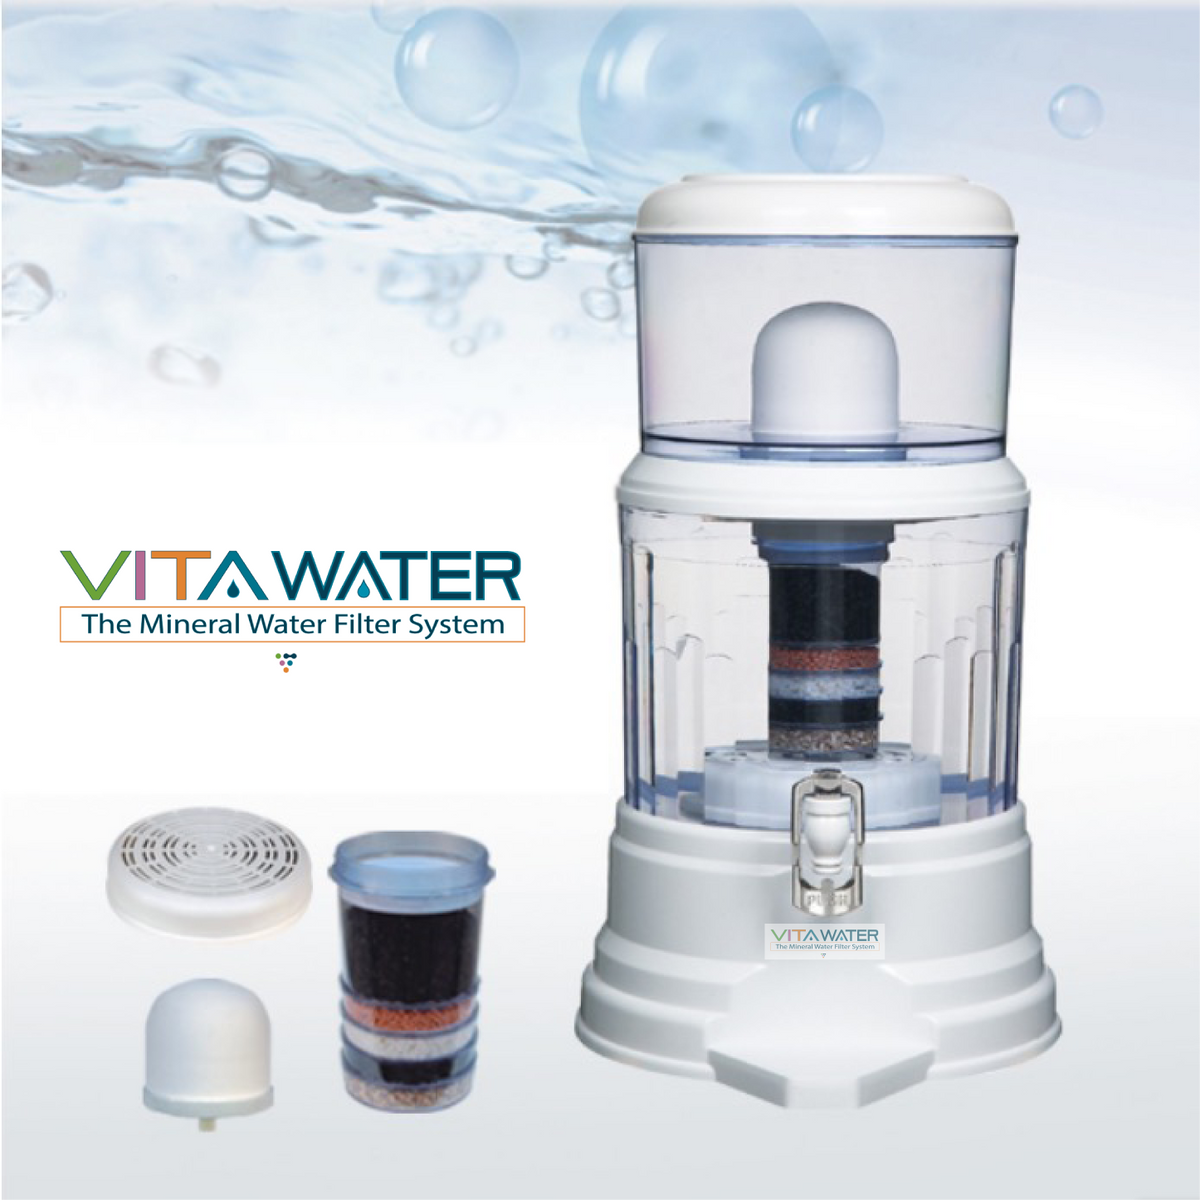 Vitawater The Mineral Water Filter System Vitastik 7159